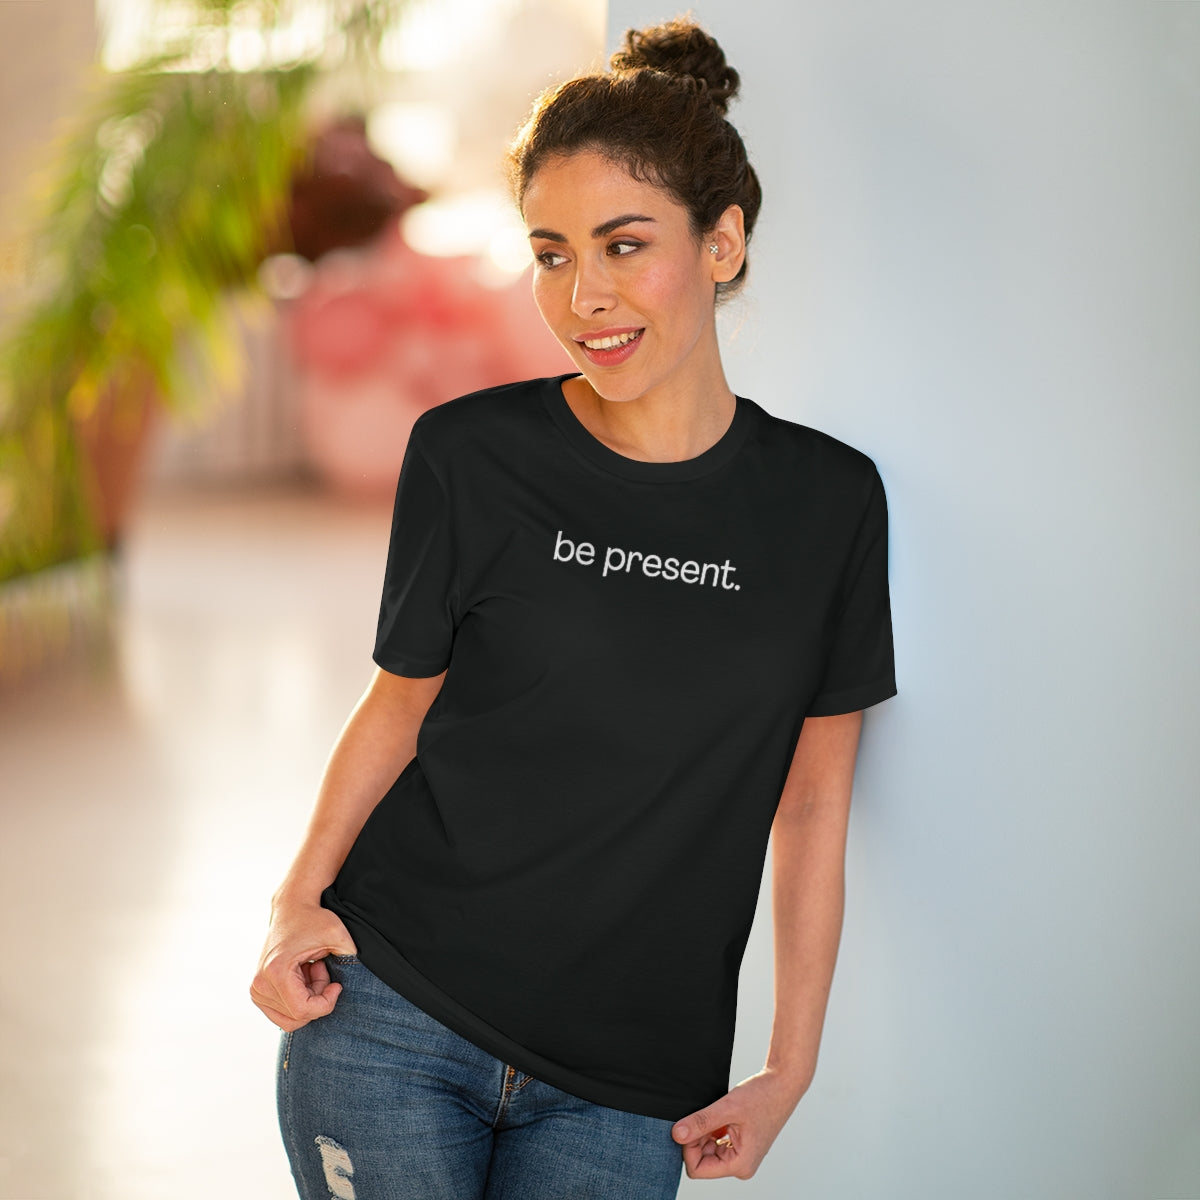 be present. - Organic Creator T-shirt - Unisex